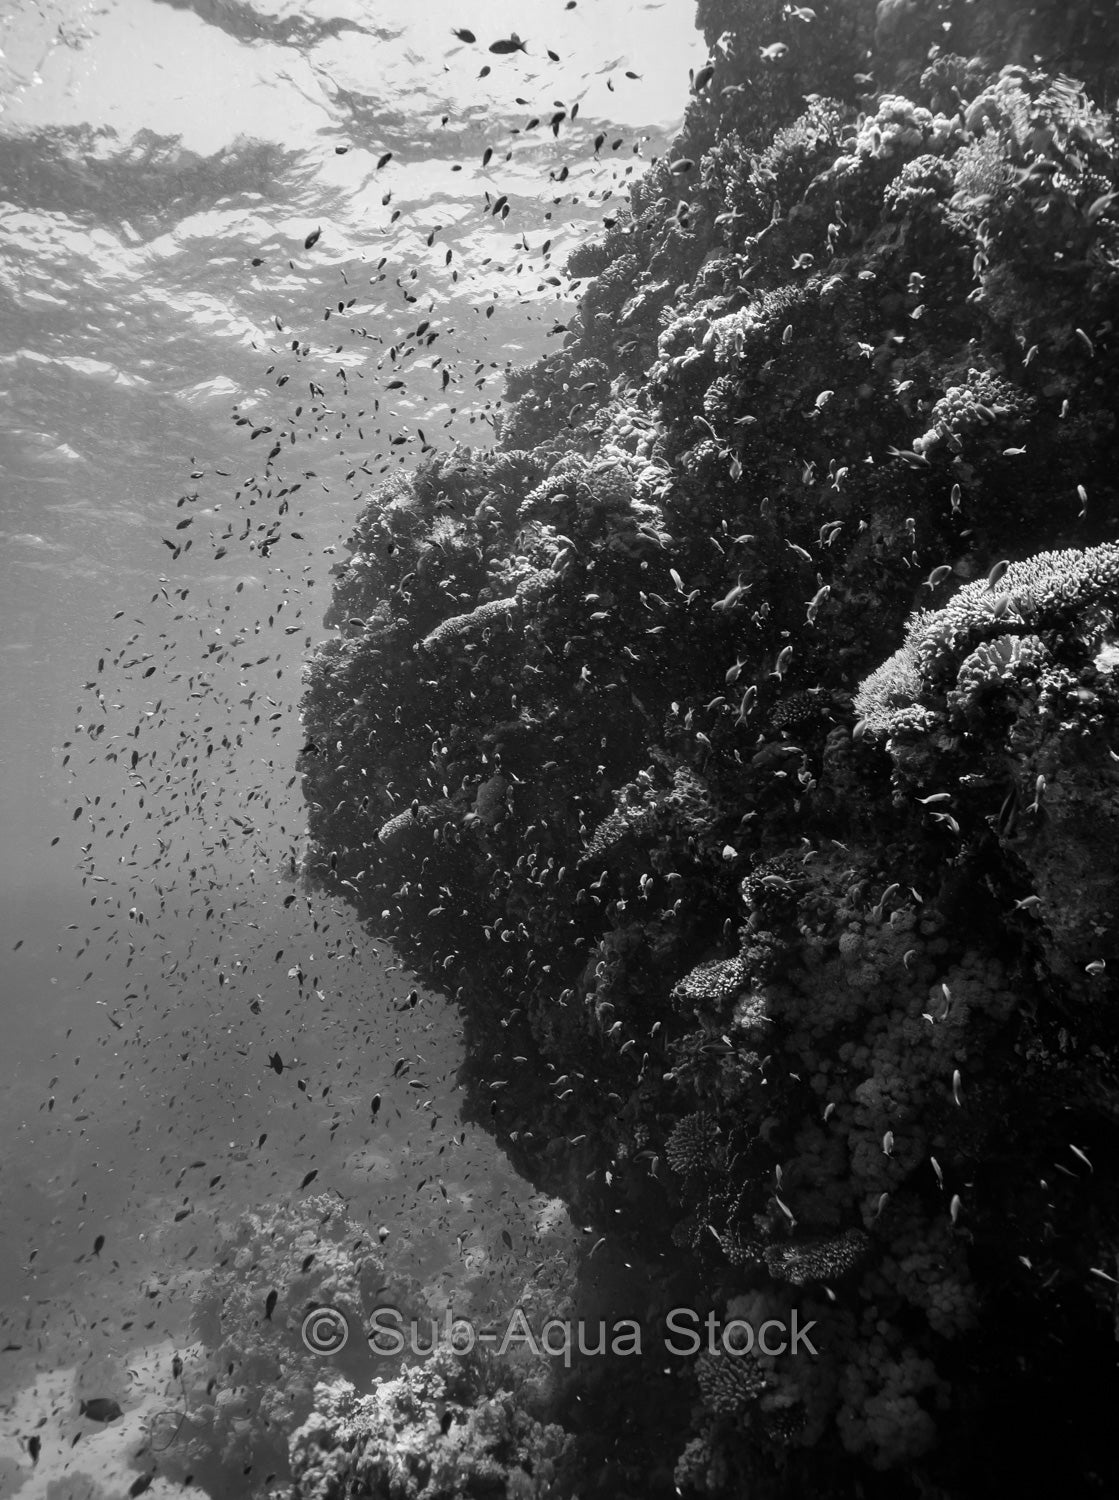 Anthias fish surrounding a coral outcrop in black & white.